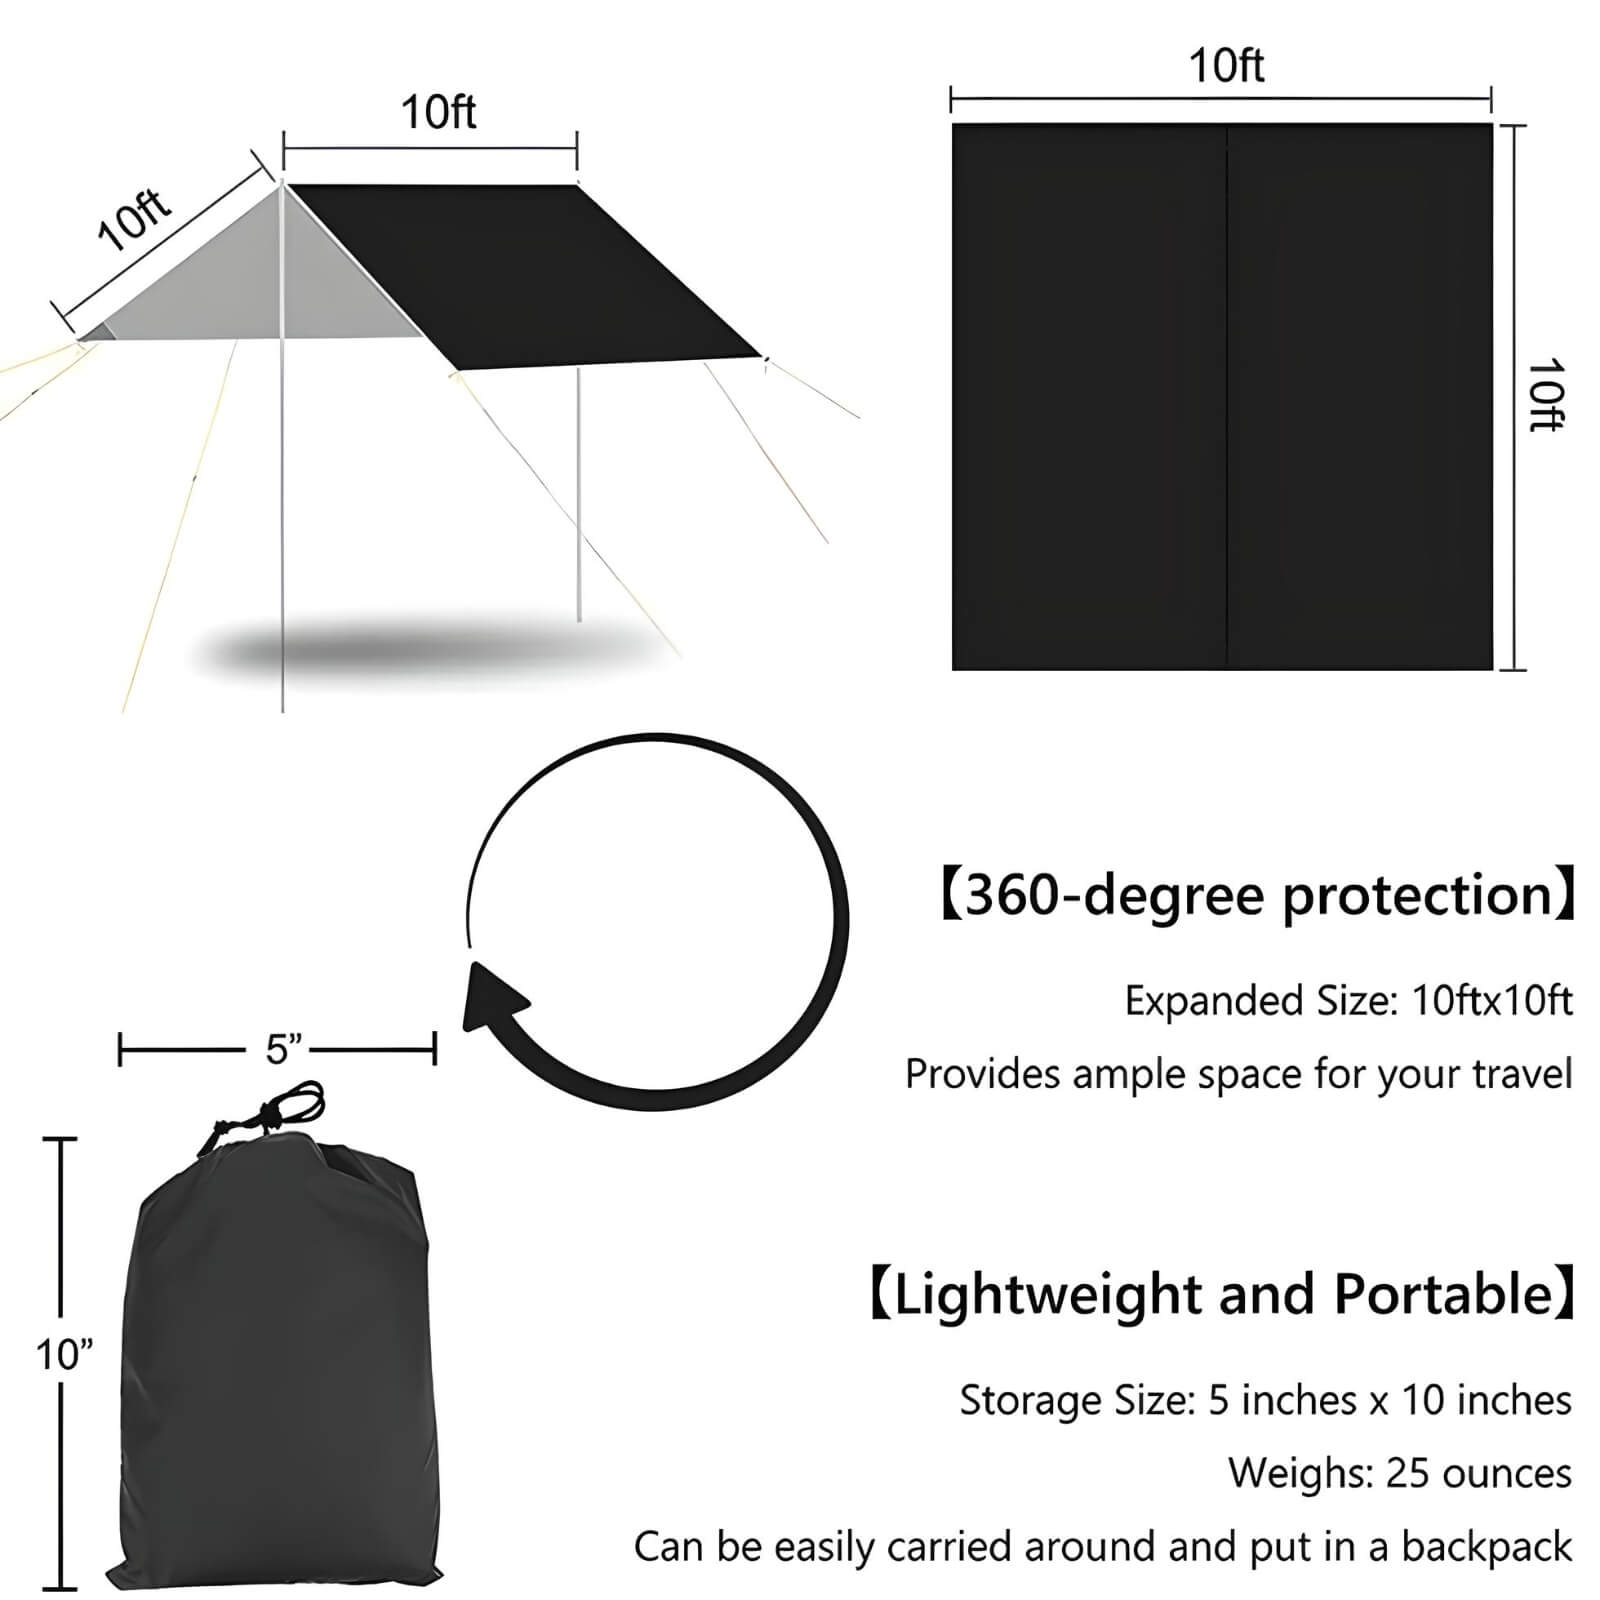 portable-camping-hammock-dimension-image